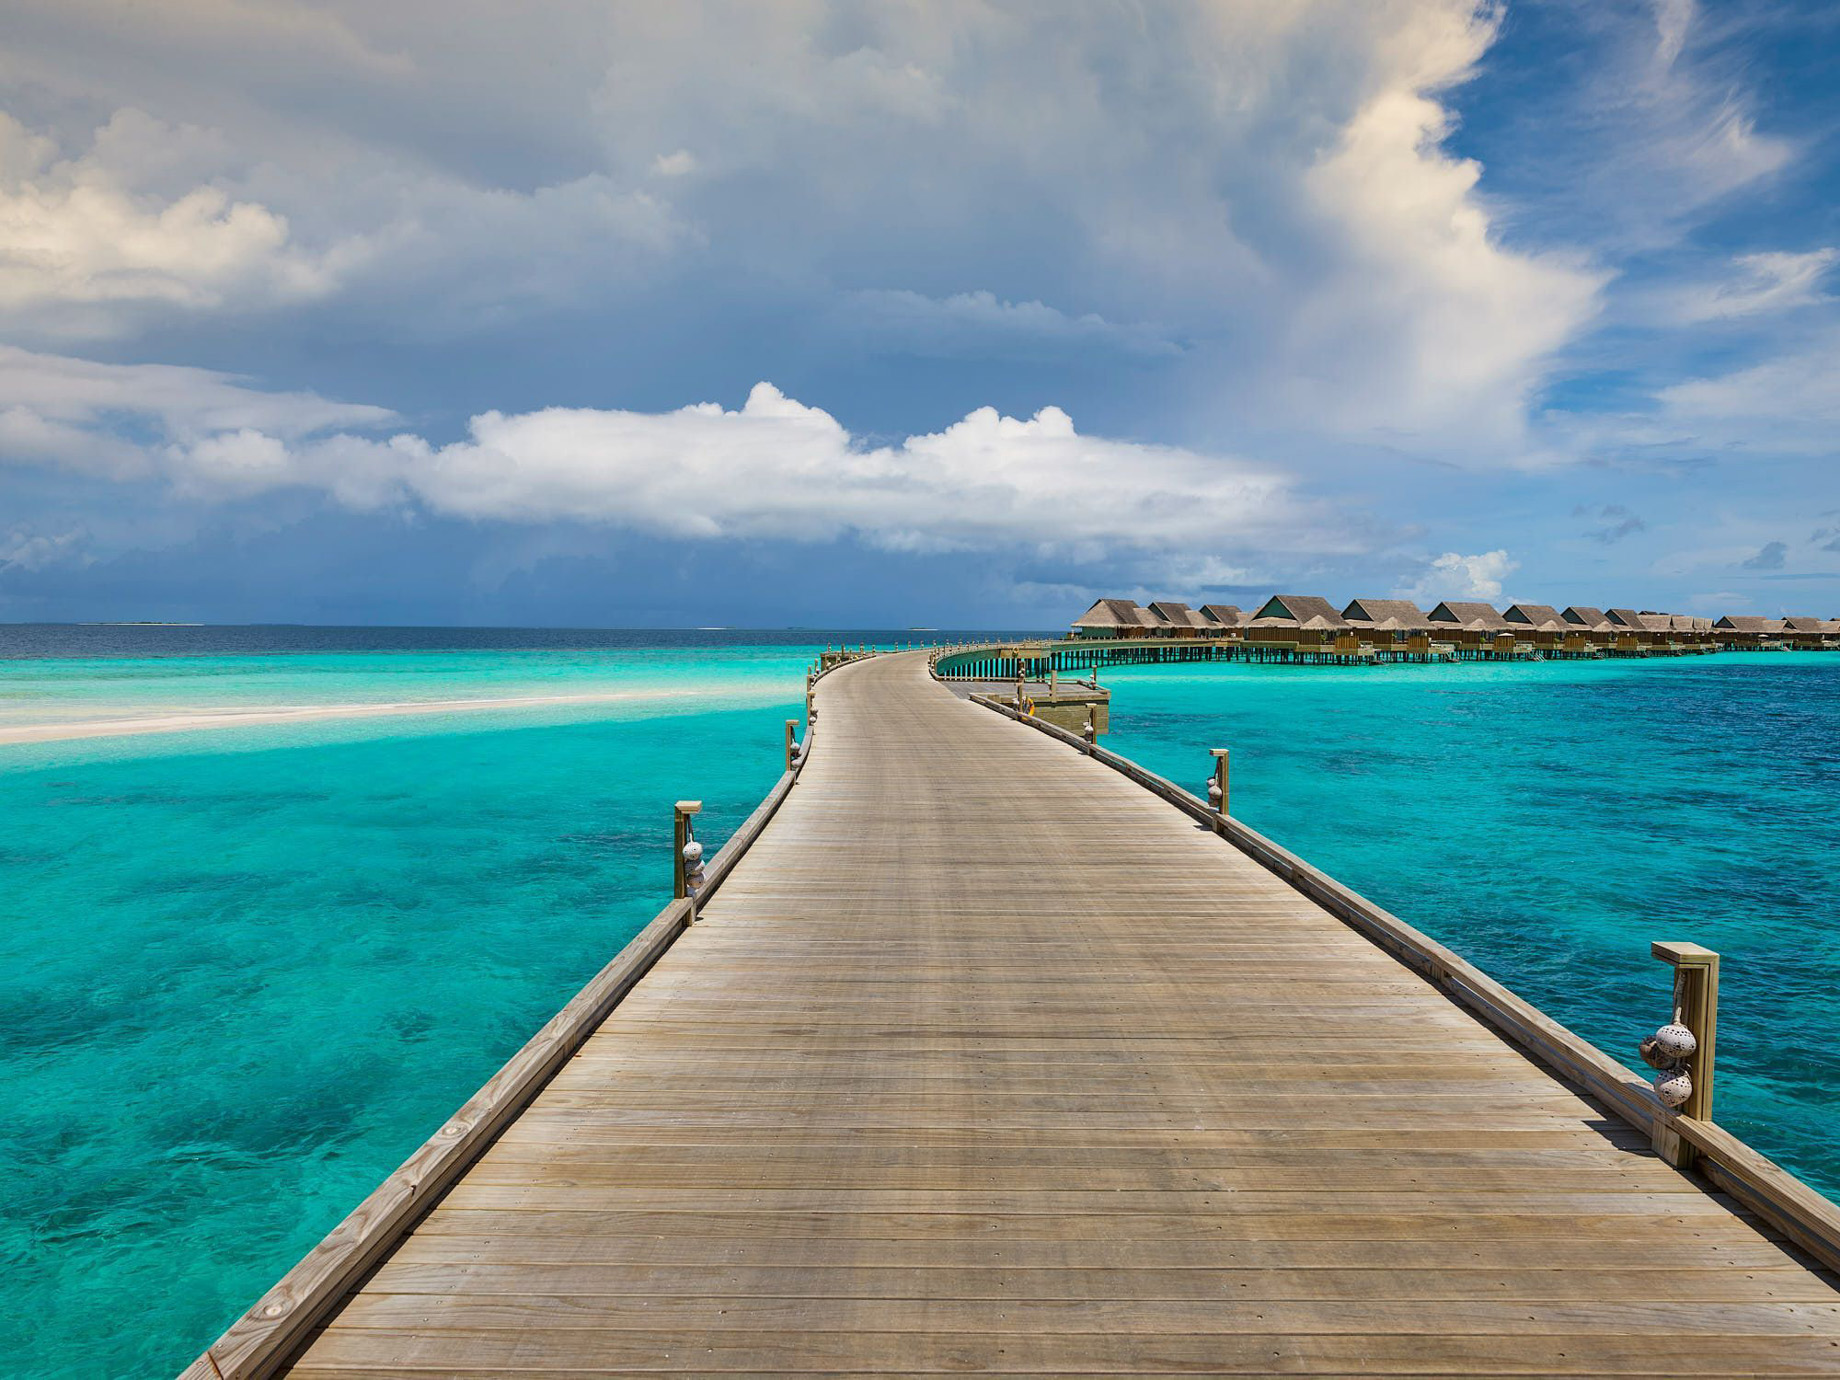 JOALI Maldives Resort - Muravandhoo Island, Maldives - Wooden Boardwalk